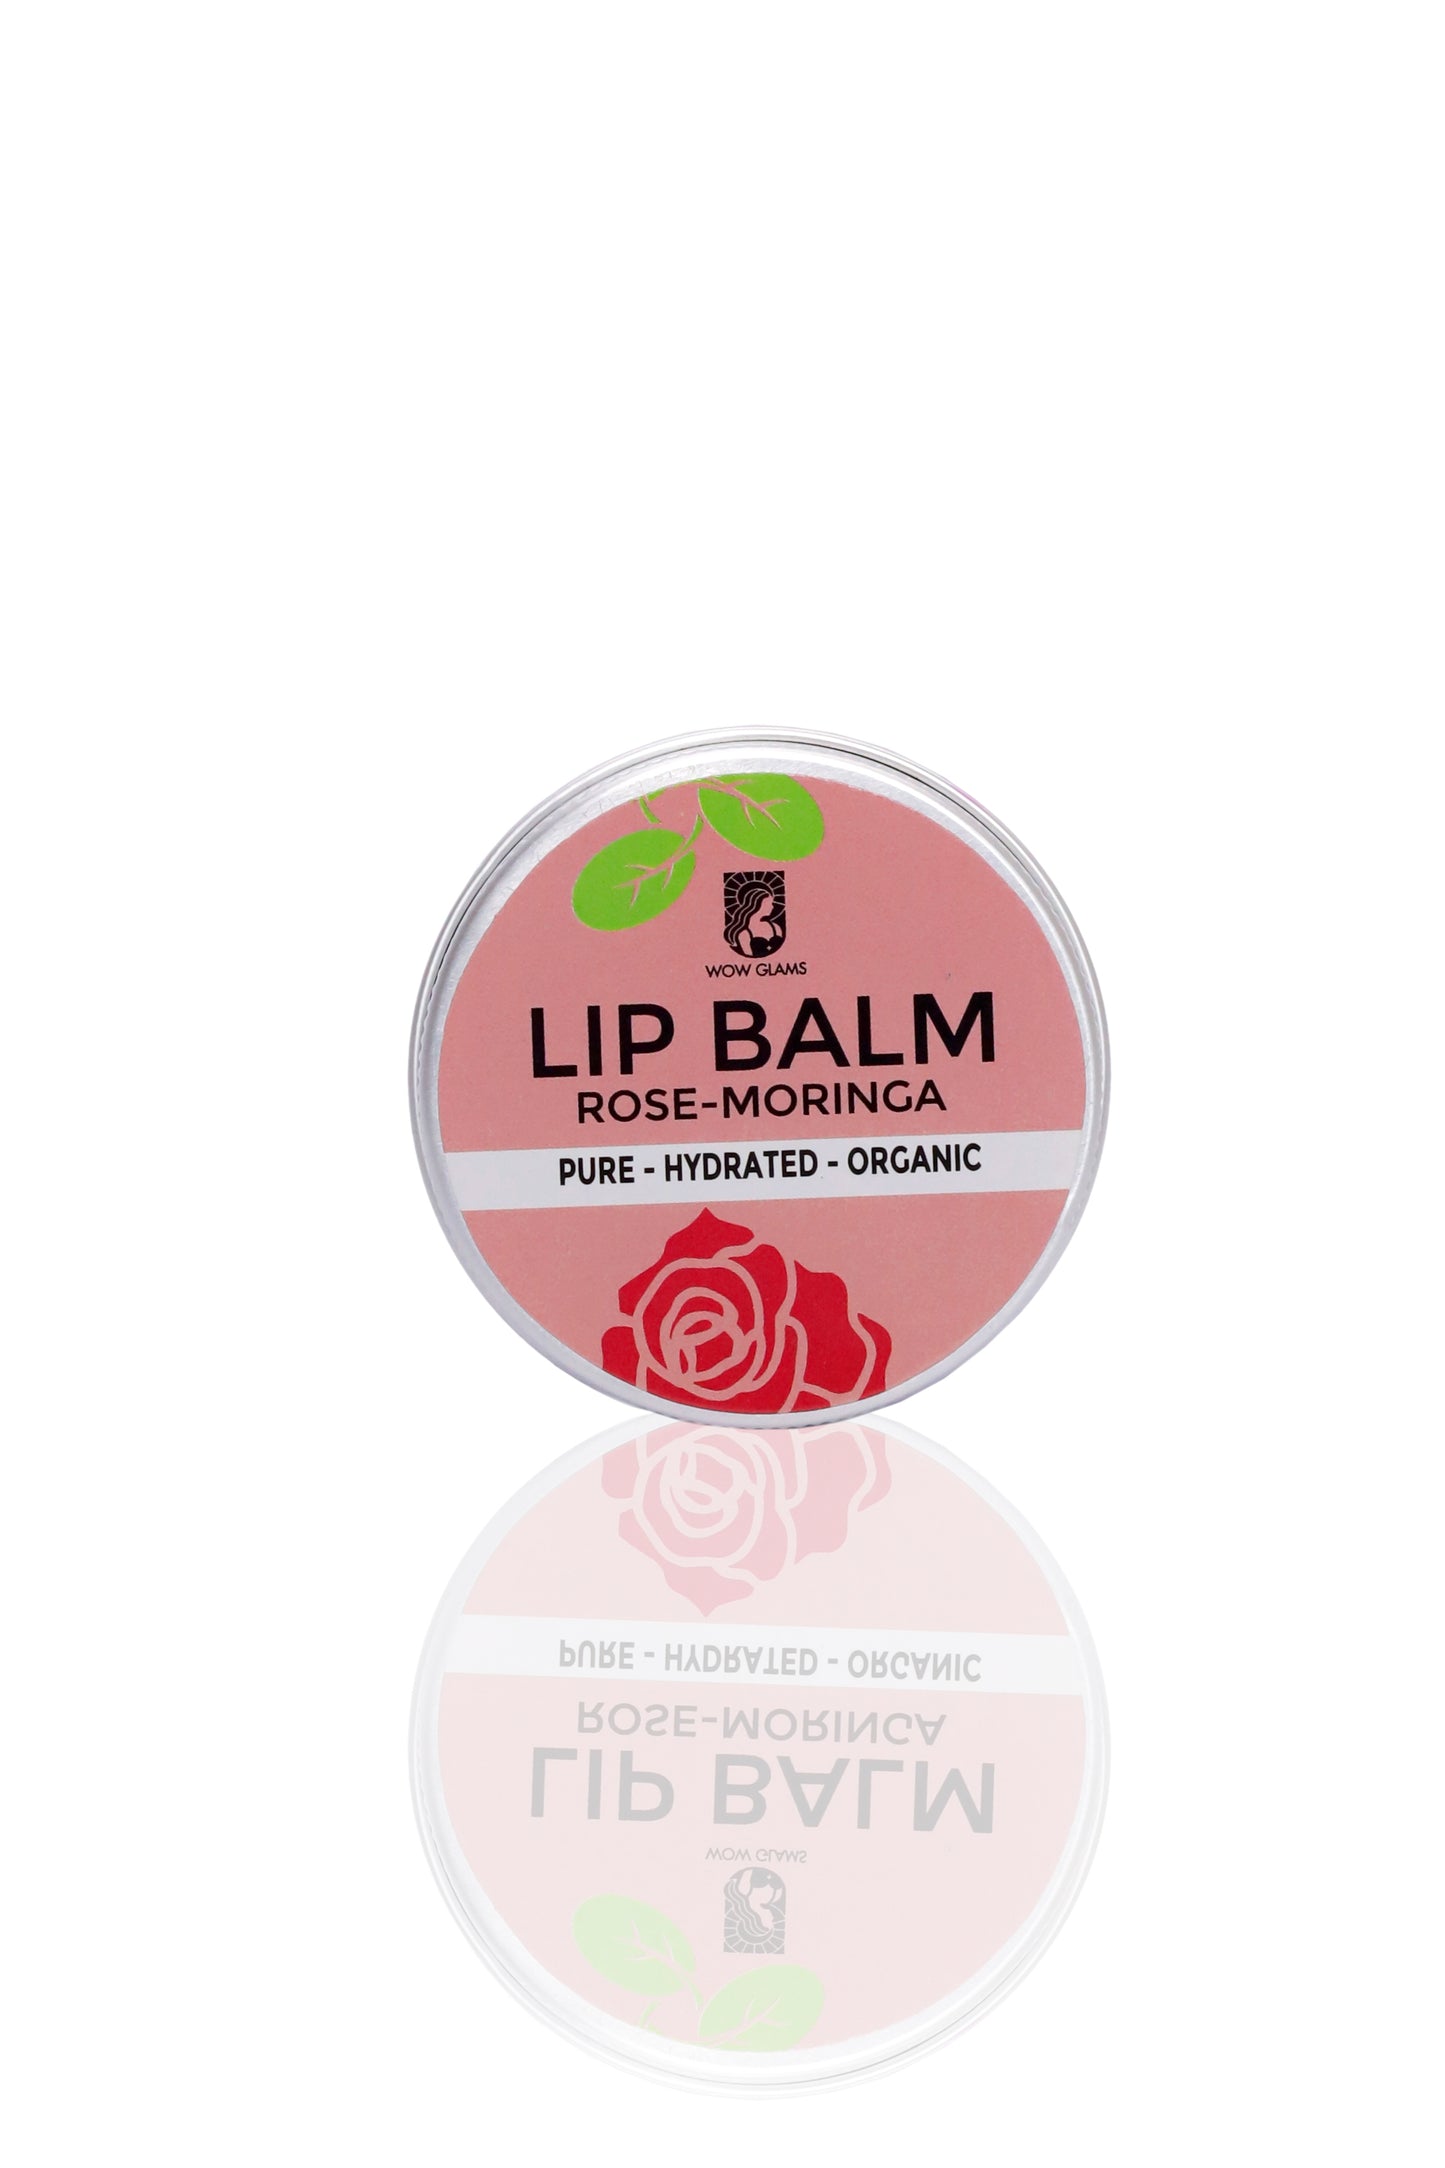 Lip Balm by wow glams